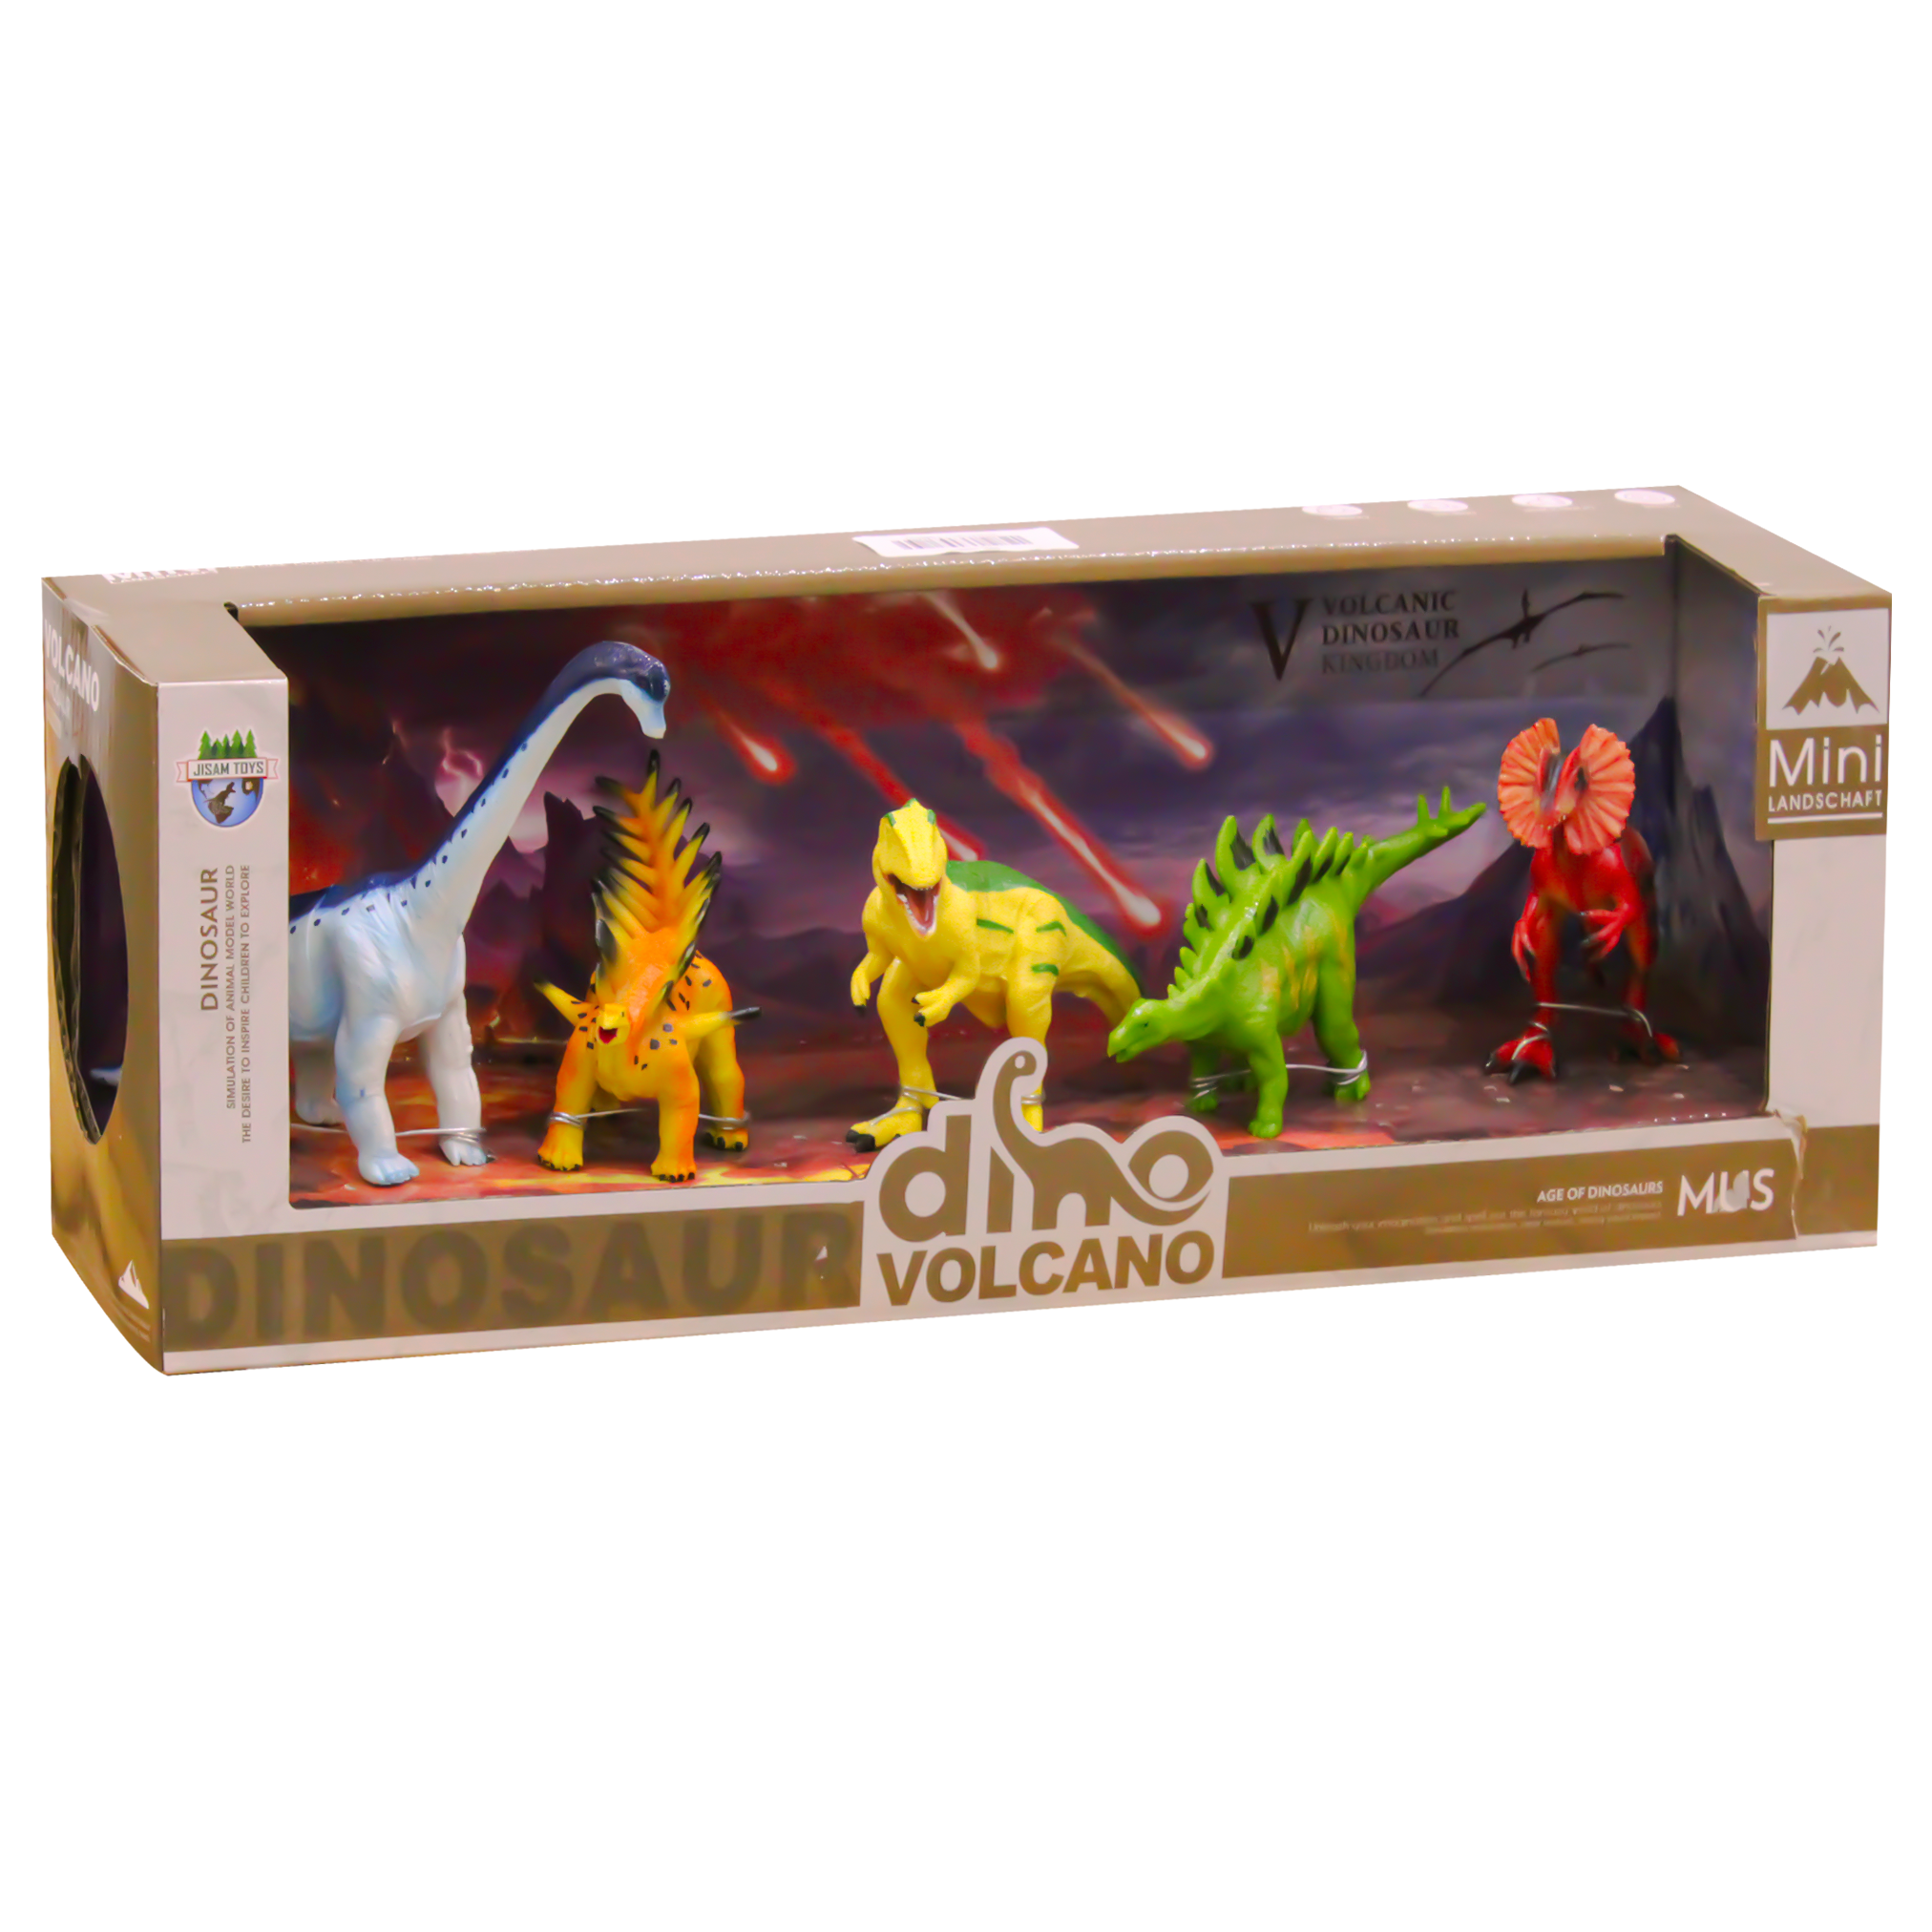 Mini Landschaft Dino Volcanic Dinosaurs Assorted 5 Figures Set E050-1 - Model C